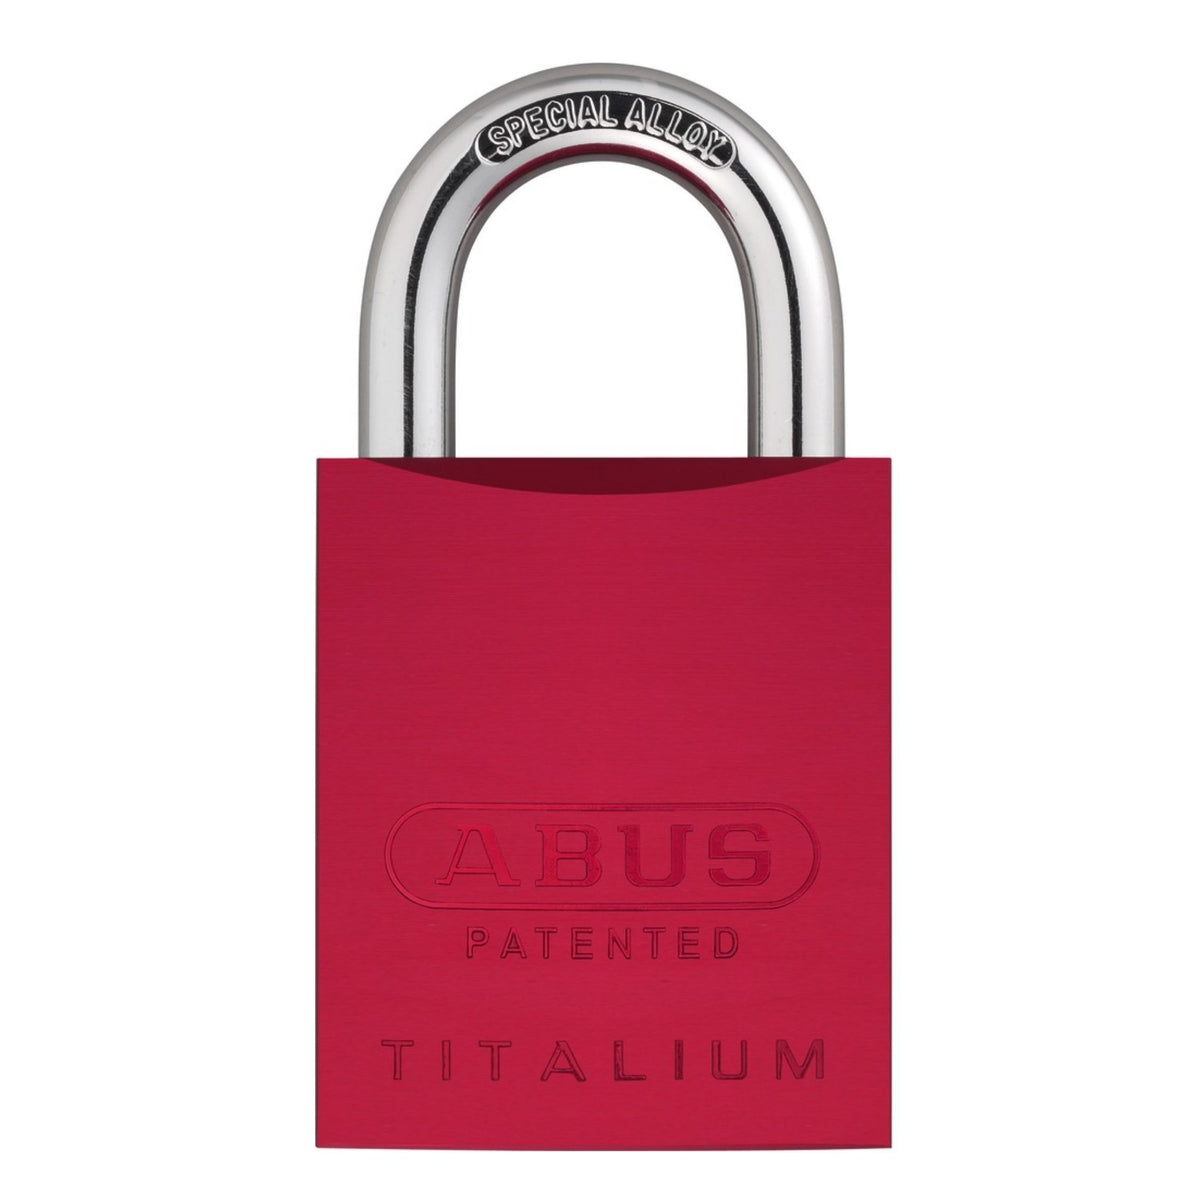 Abus 83AL/45 Series Titalium Safety Locks - The Lock Source